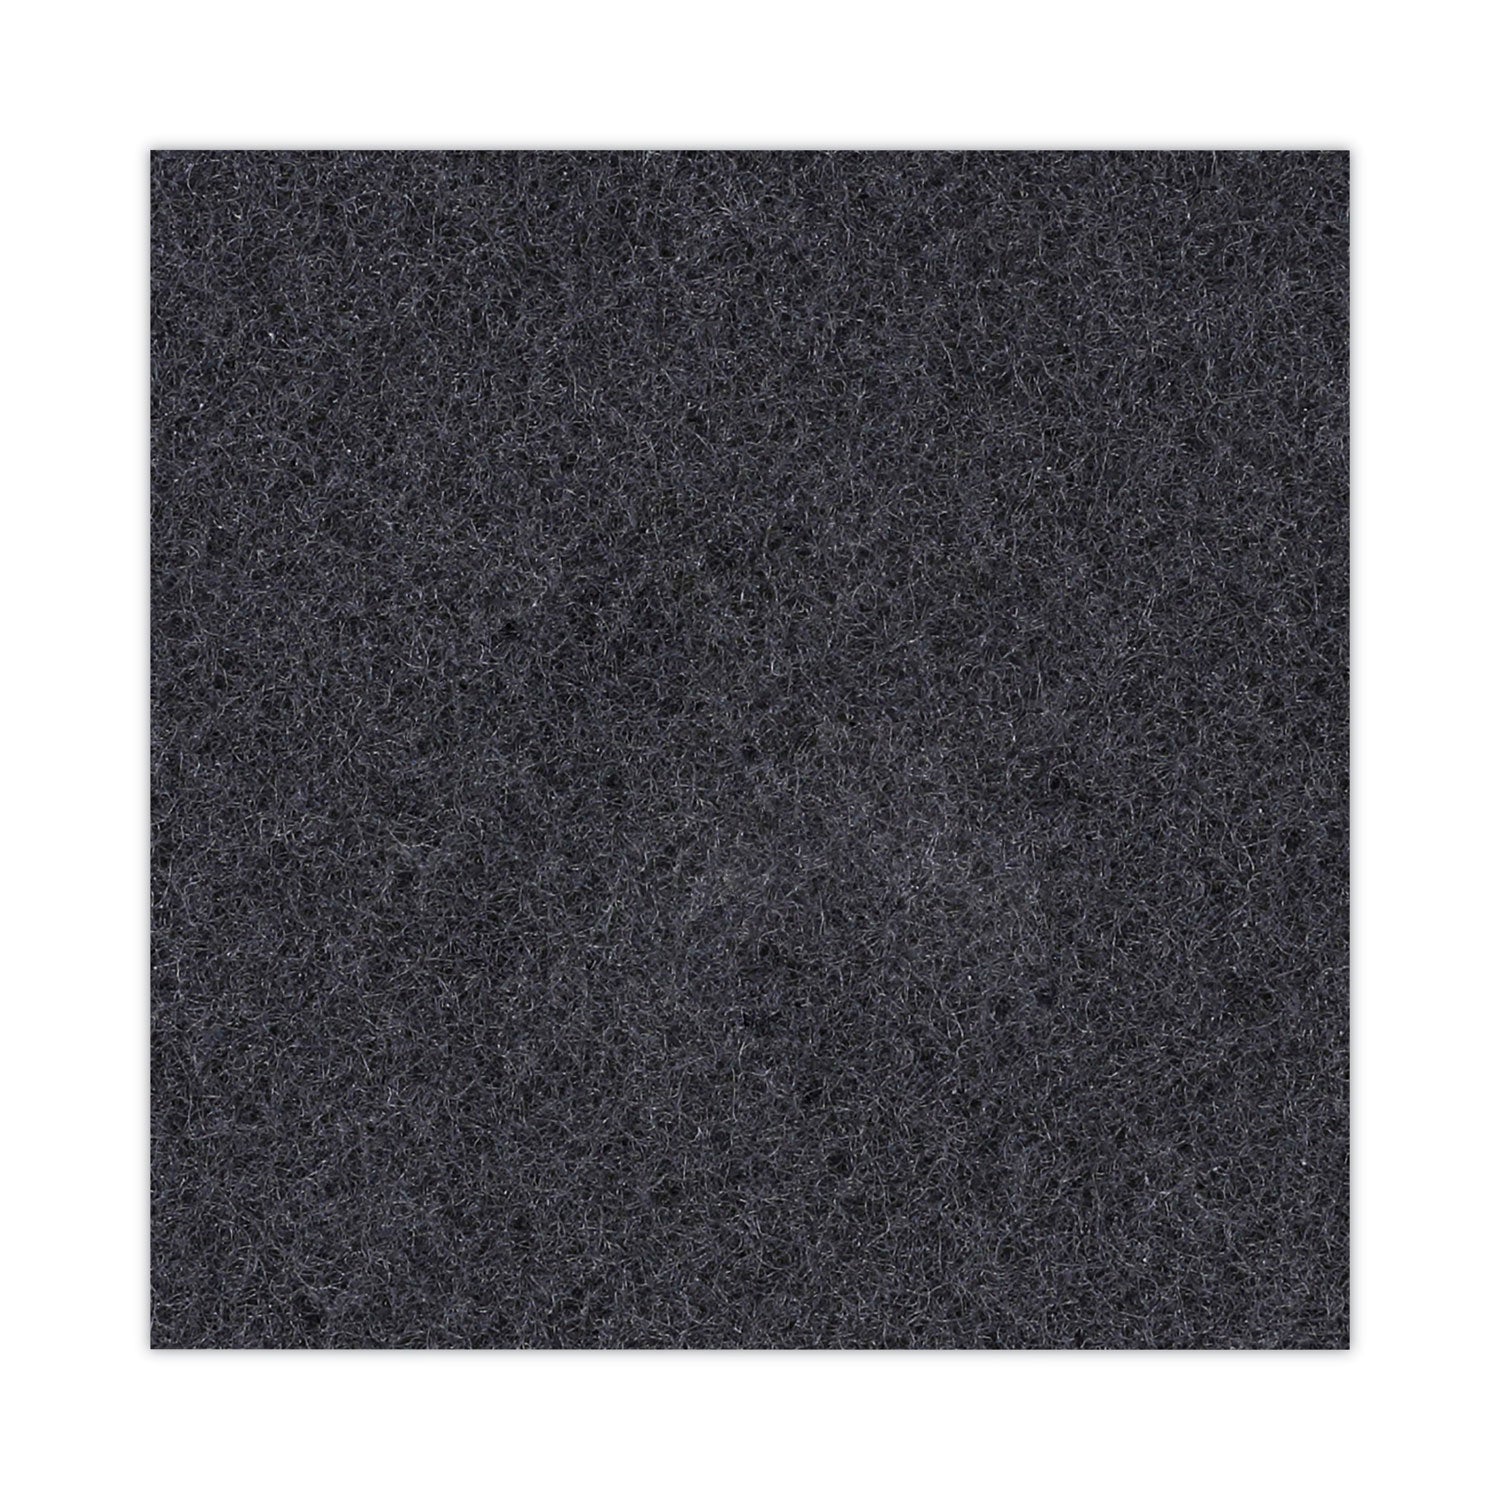 stripping-floor-pads-18-diameter-black-5-carton_bwk4018bla - 6